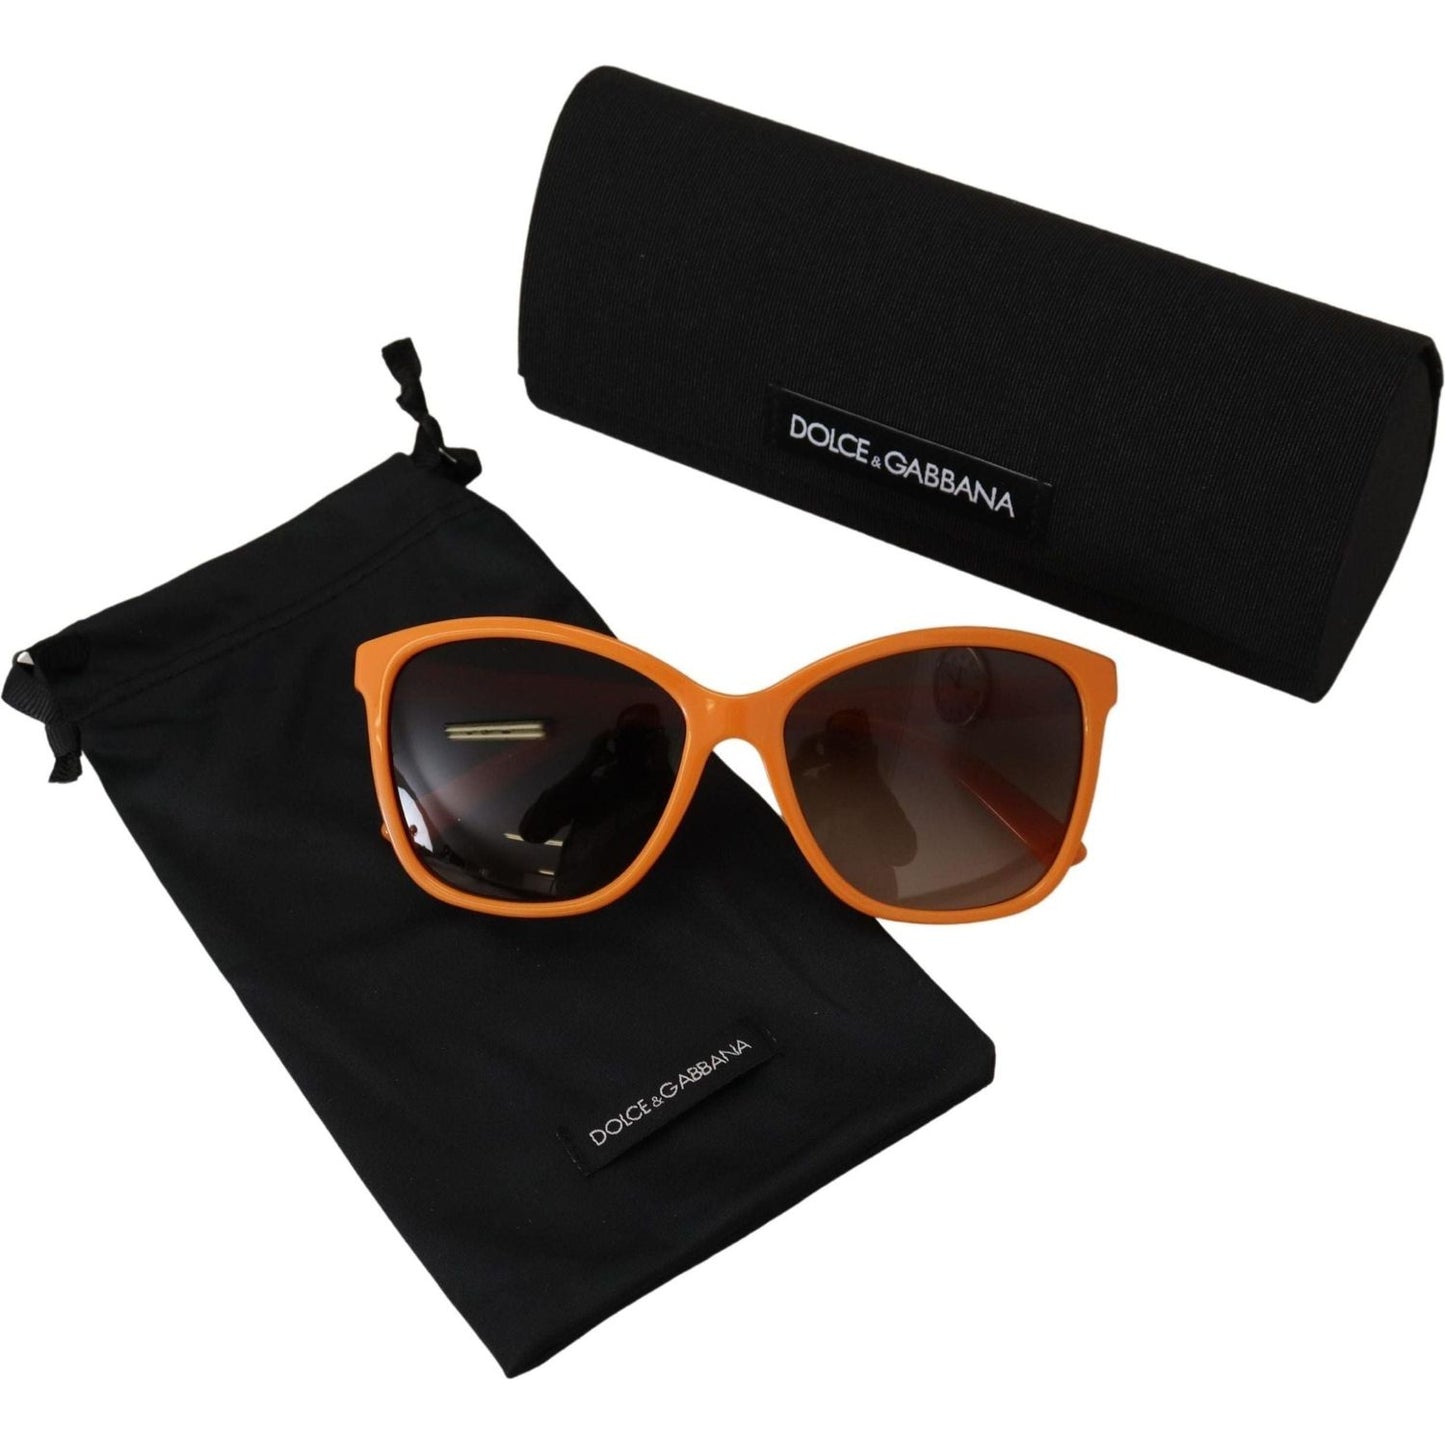 Dolce & Gabbana Chic Orange Round Sunglasses for Women orange-acetate-frame-round-shades-dg4170pm-sunglasses IMG_4517-1-scaled-00eedf85-391.jpg